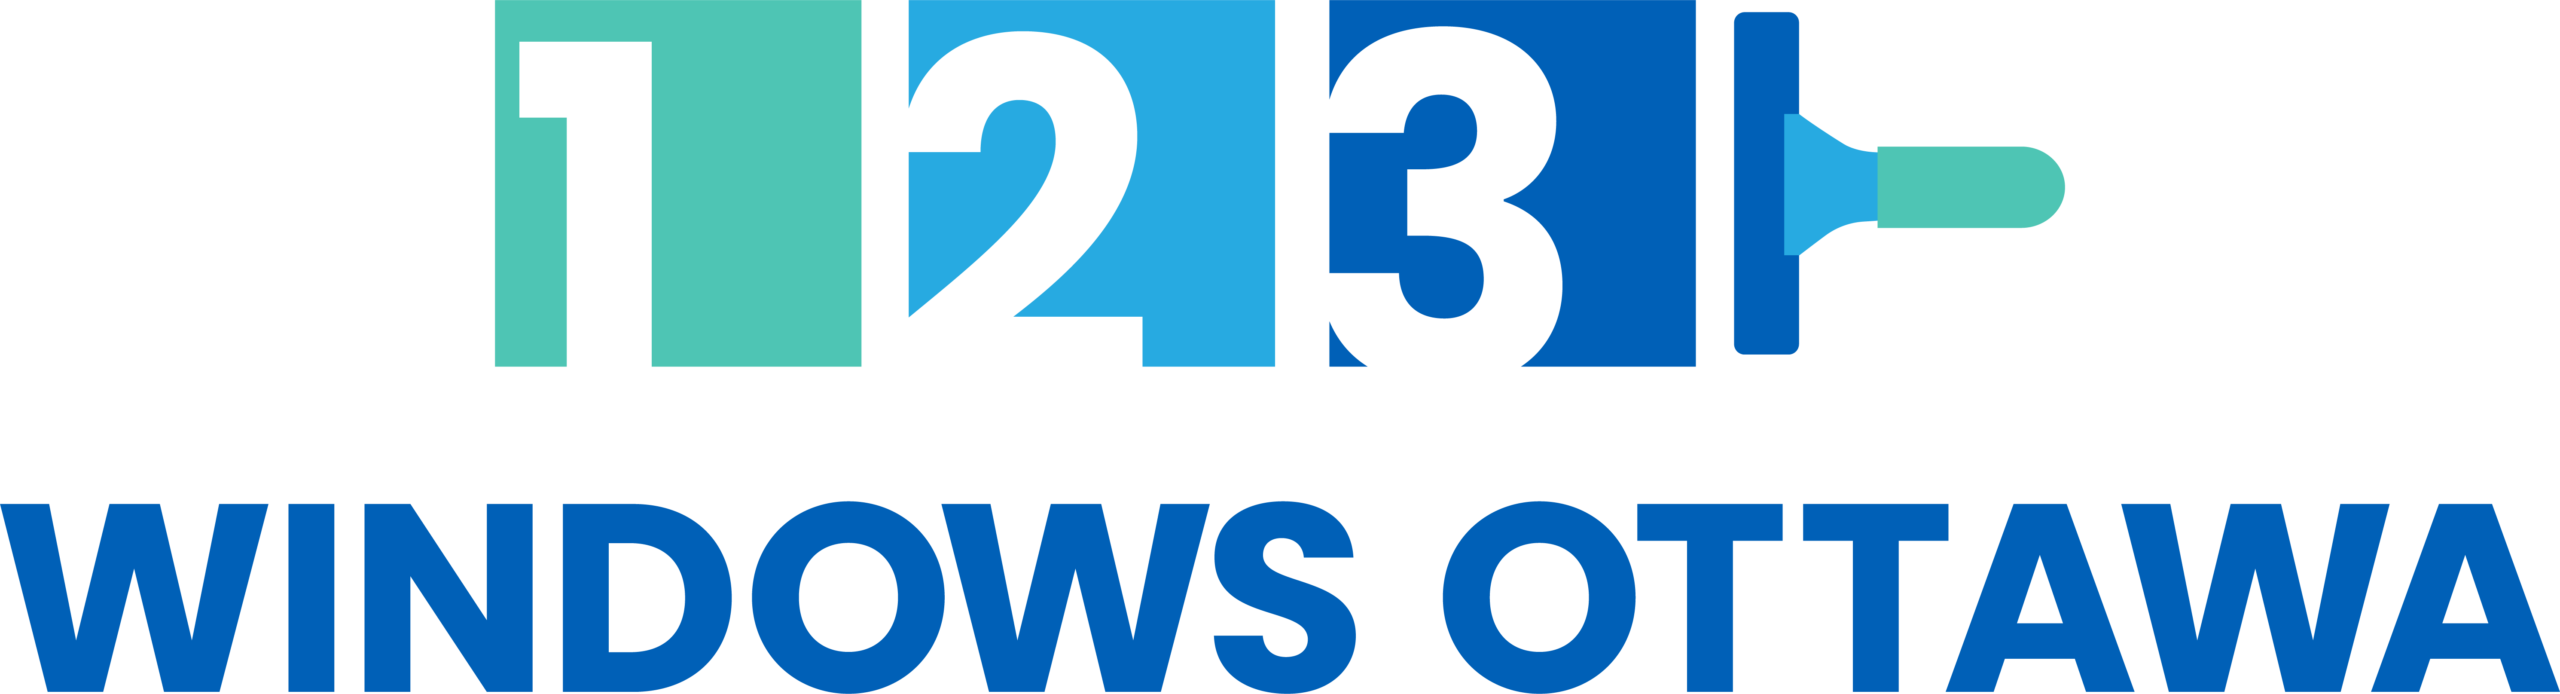 123 Windows Ottawa Inc.